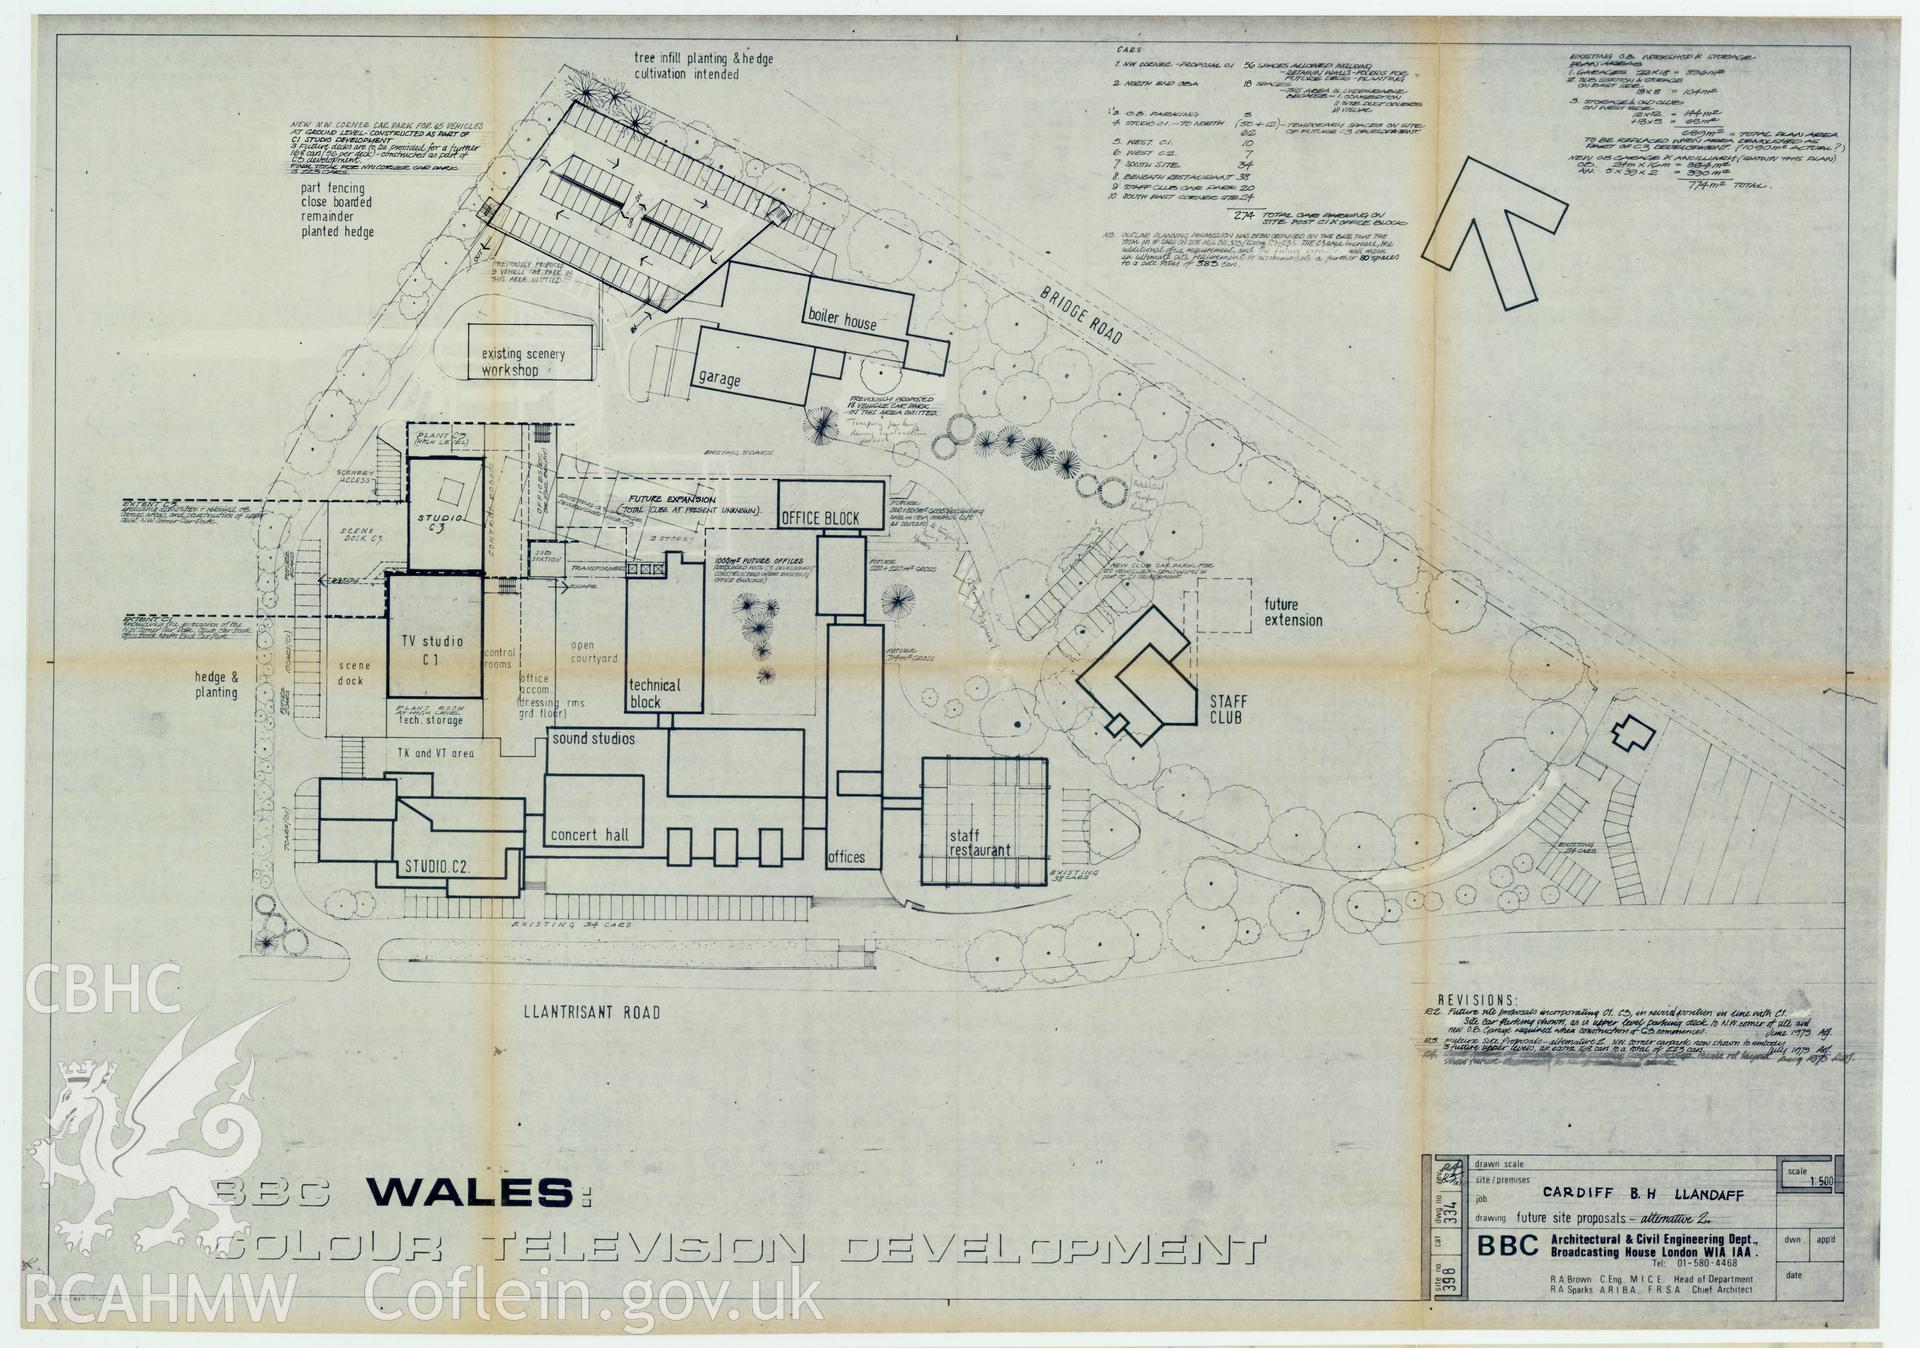 Digitised drawing plan of BBC Llandaff  - HQ development. Drawing no. 334 (R4). December 1976.